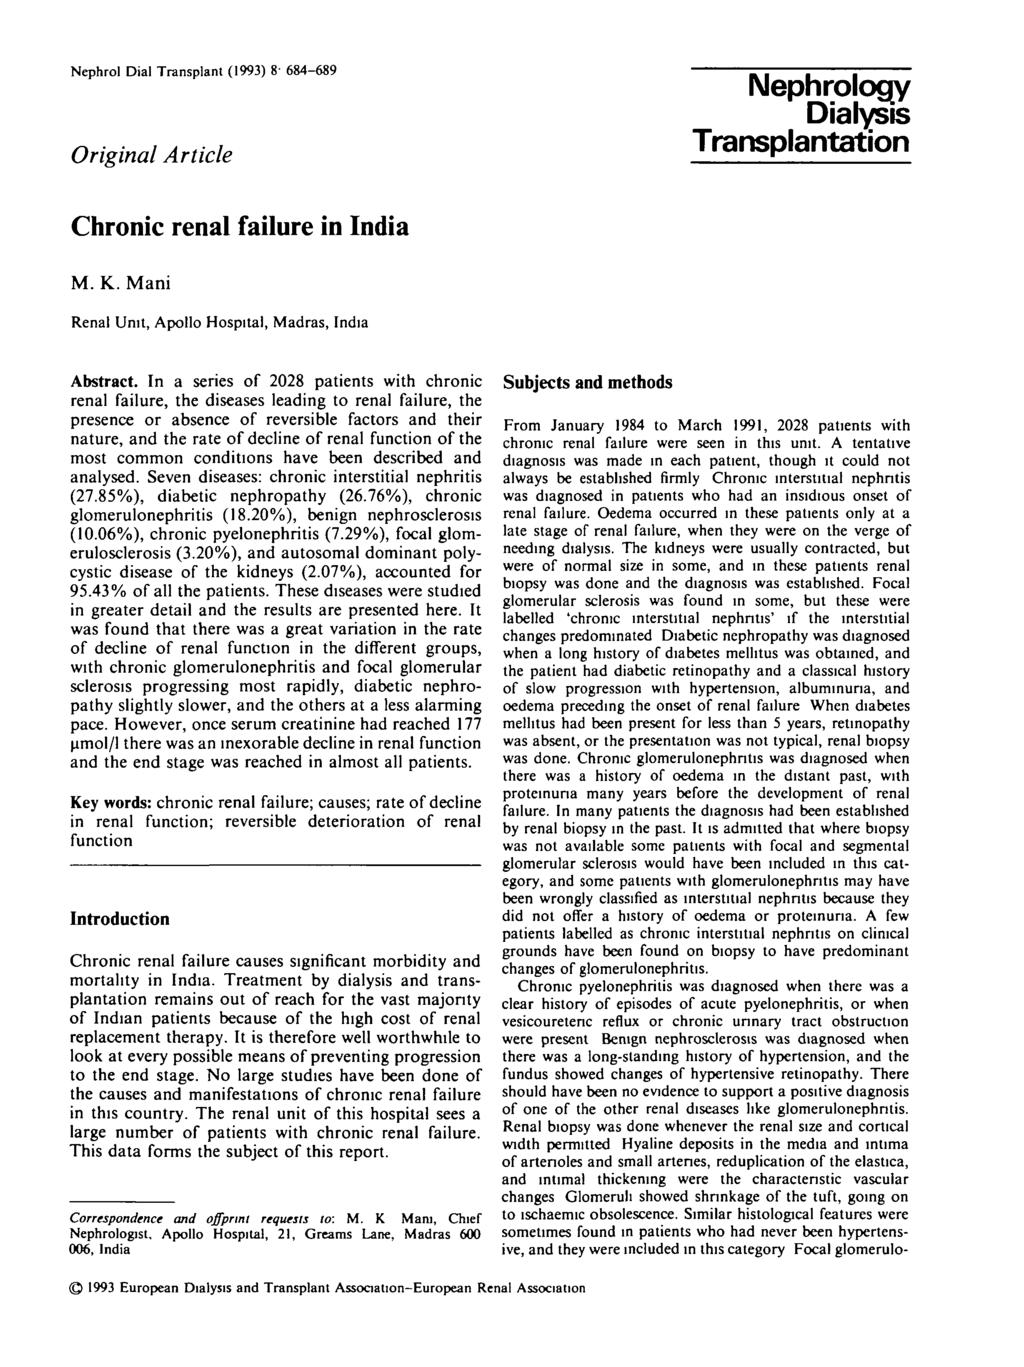 Nephrol Dial Transplant (993) 8-684-689 Original Article Nephrology Dialysis Transplantation Chronic renal failure in India M. K. Mani Renal Unit, Apollo Hospital, Madras, India Abstract.